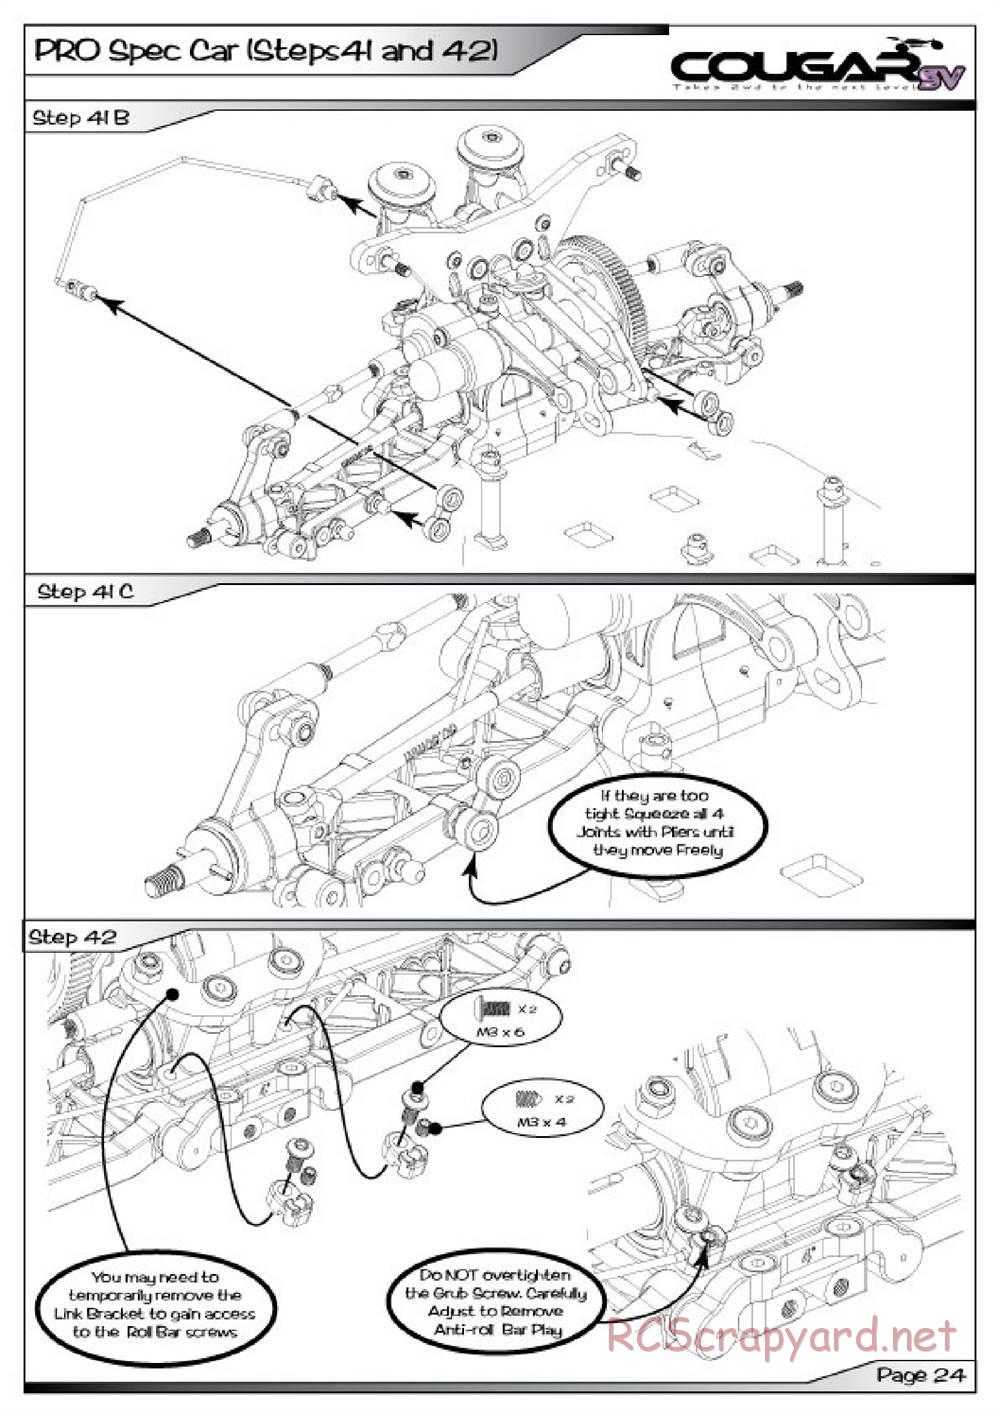 Schumacher - Cougar SV - Manual - Page 25